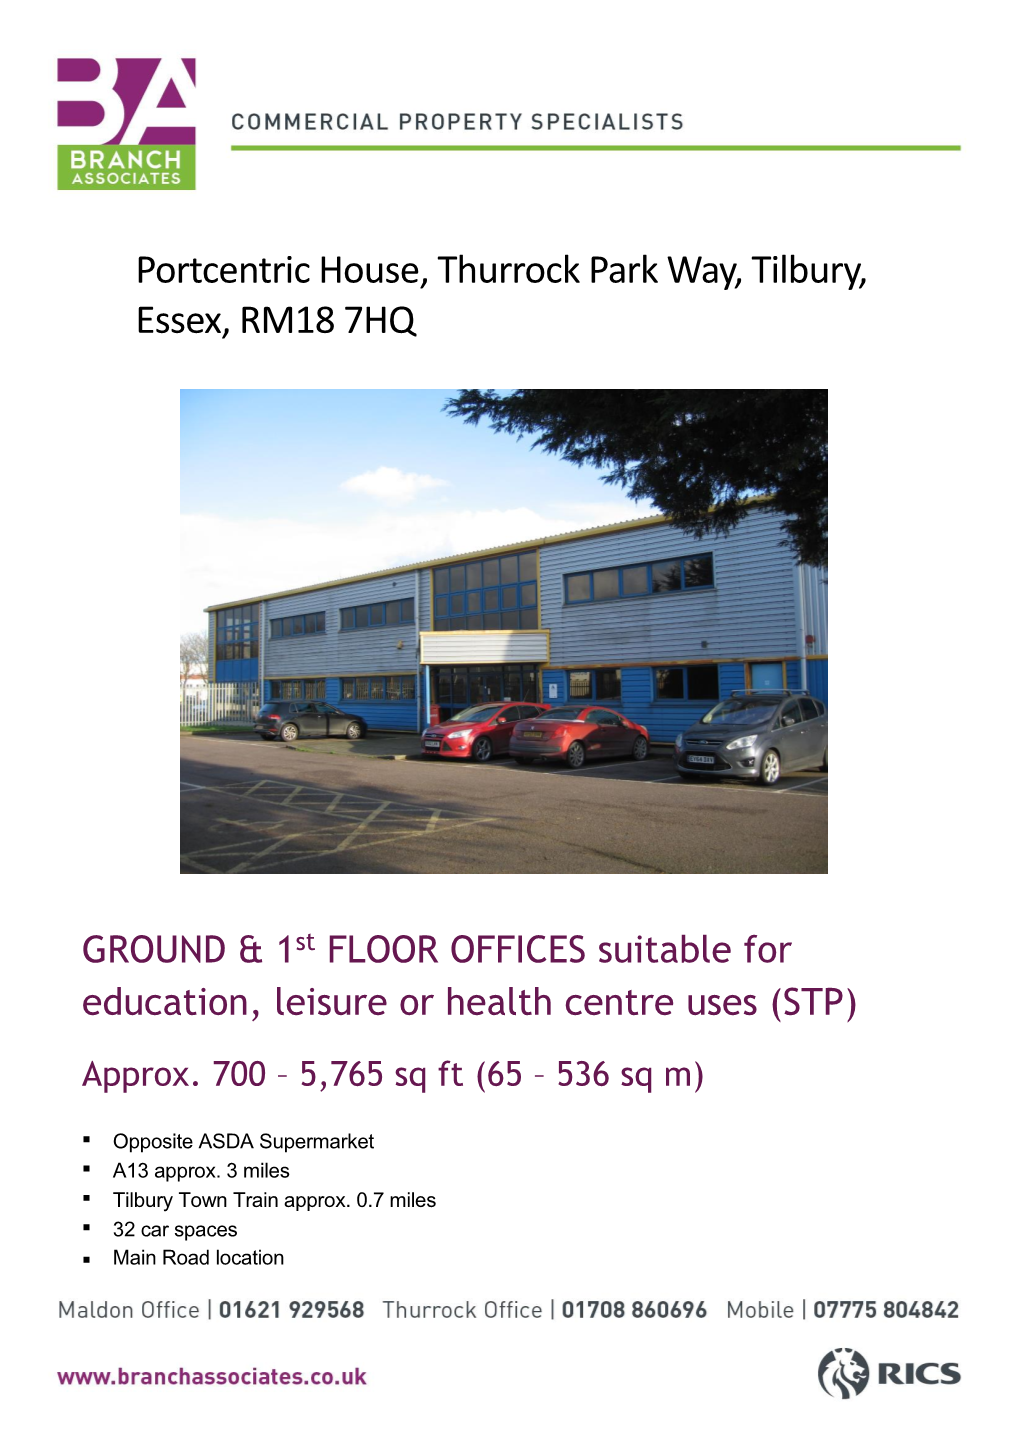 Portcentric House, Thurrock Park Way, Tilbury, Essex, RM18 7HQ